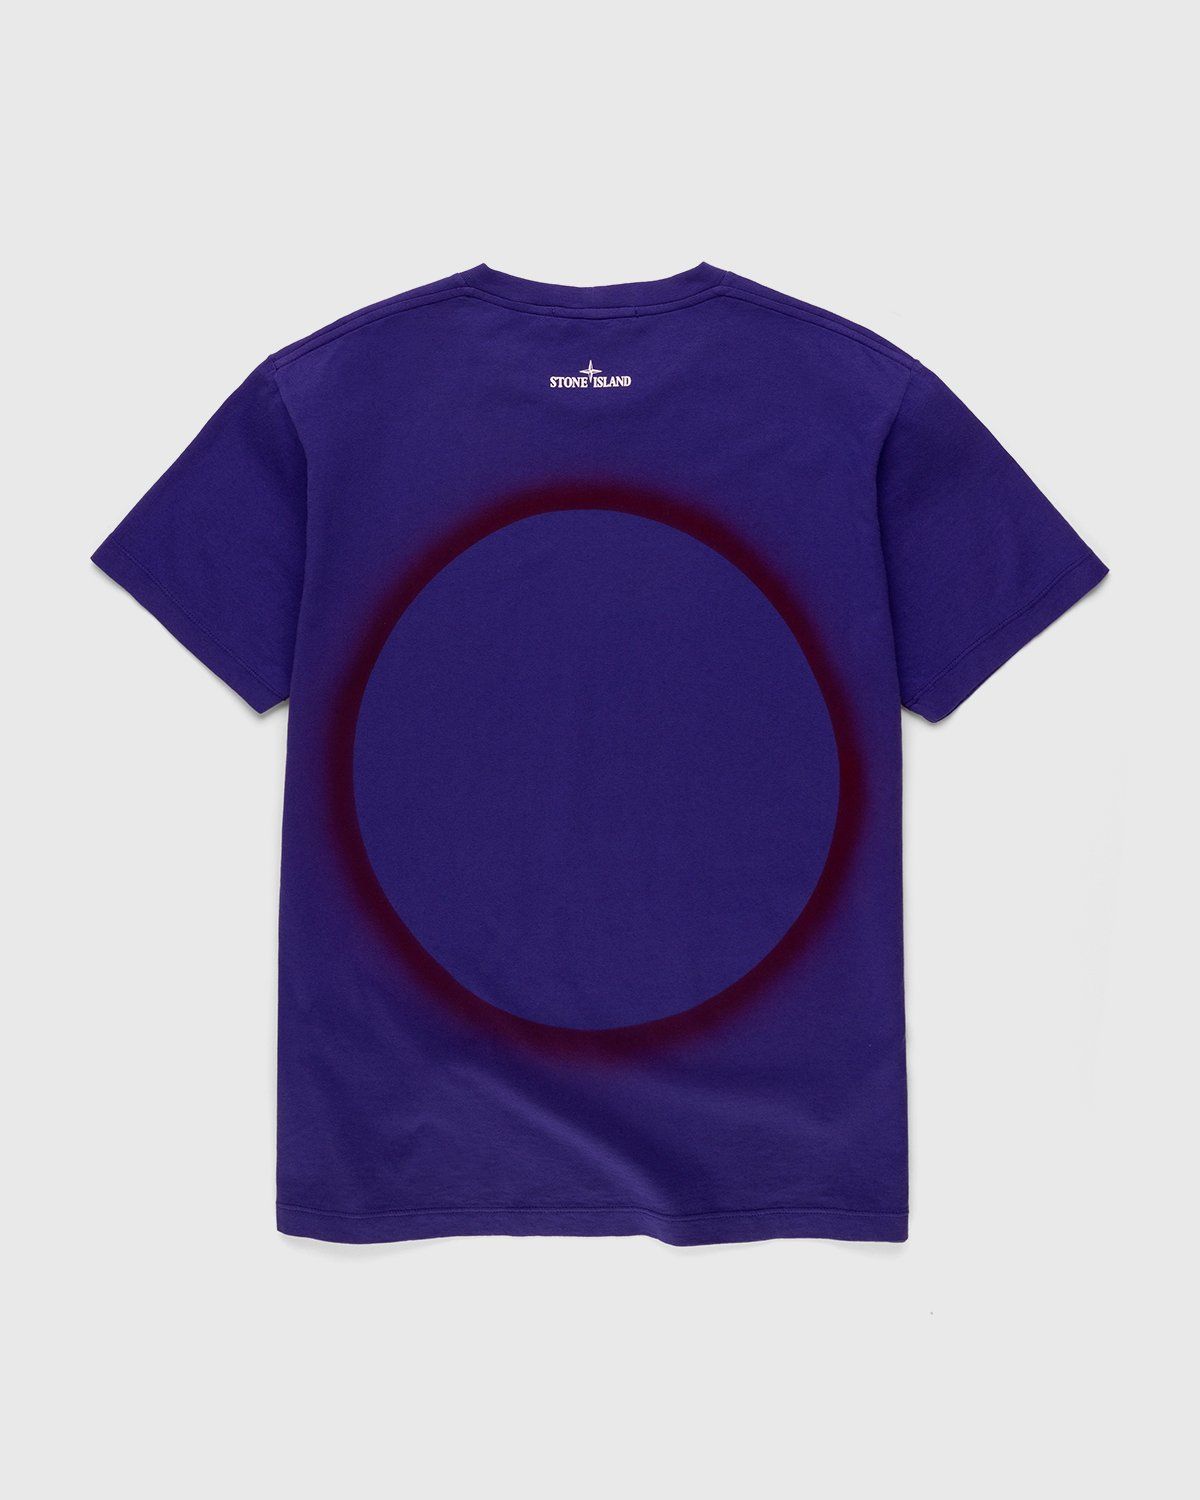 Stone Island – 2NS95 Garment-Dyed Solar Eclipse One T-Shirt Bright Blue - Image 2